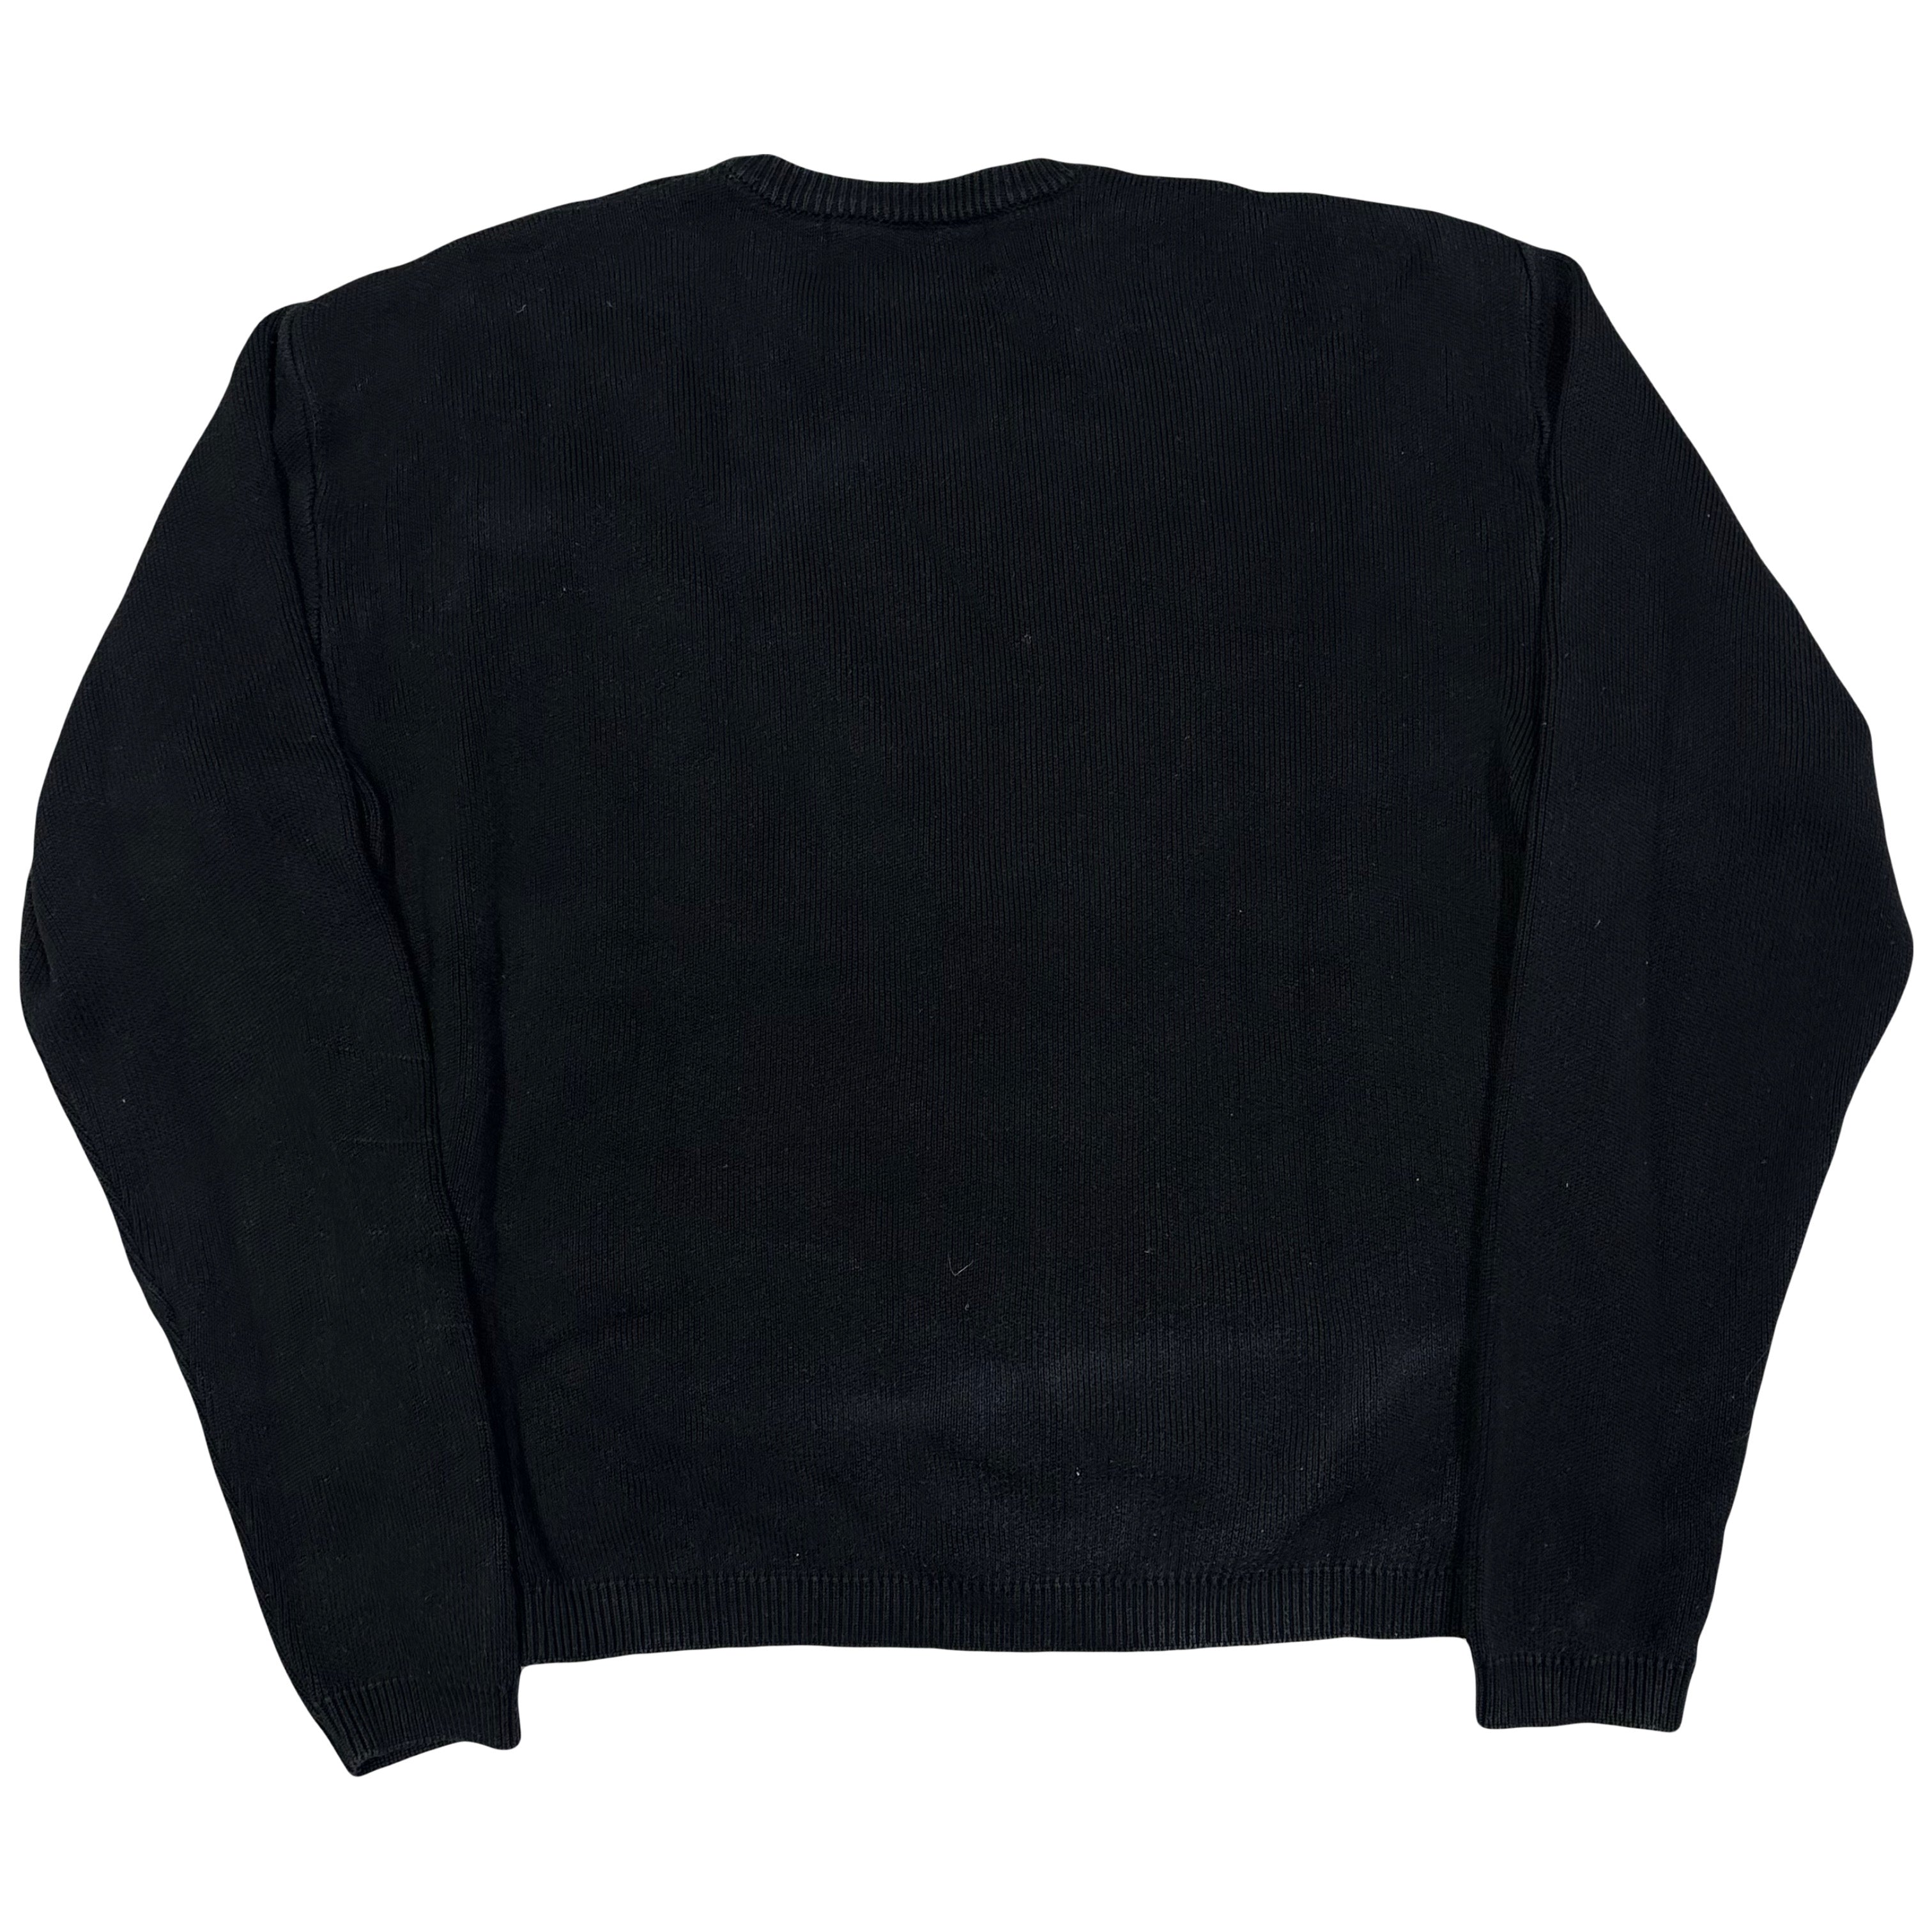 Misbhv Brutalisme Knitted Sweatshirt In Black & Green ( XL )